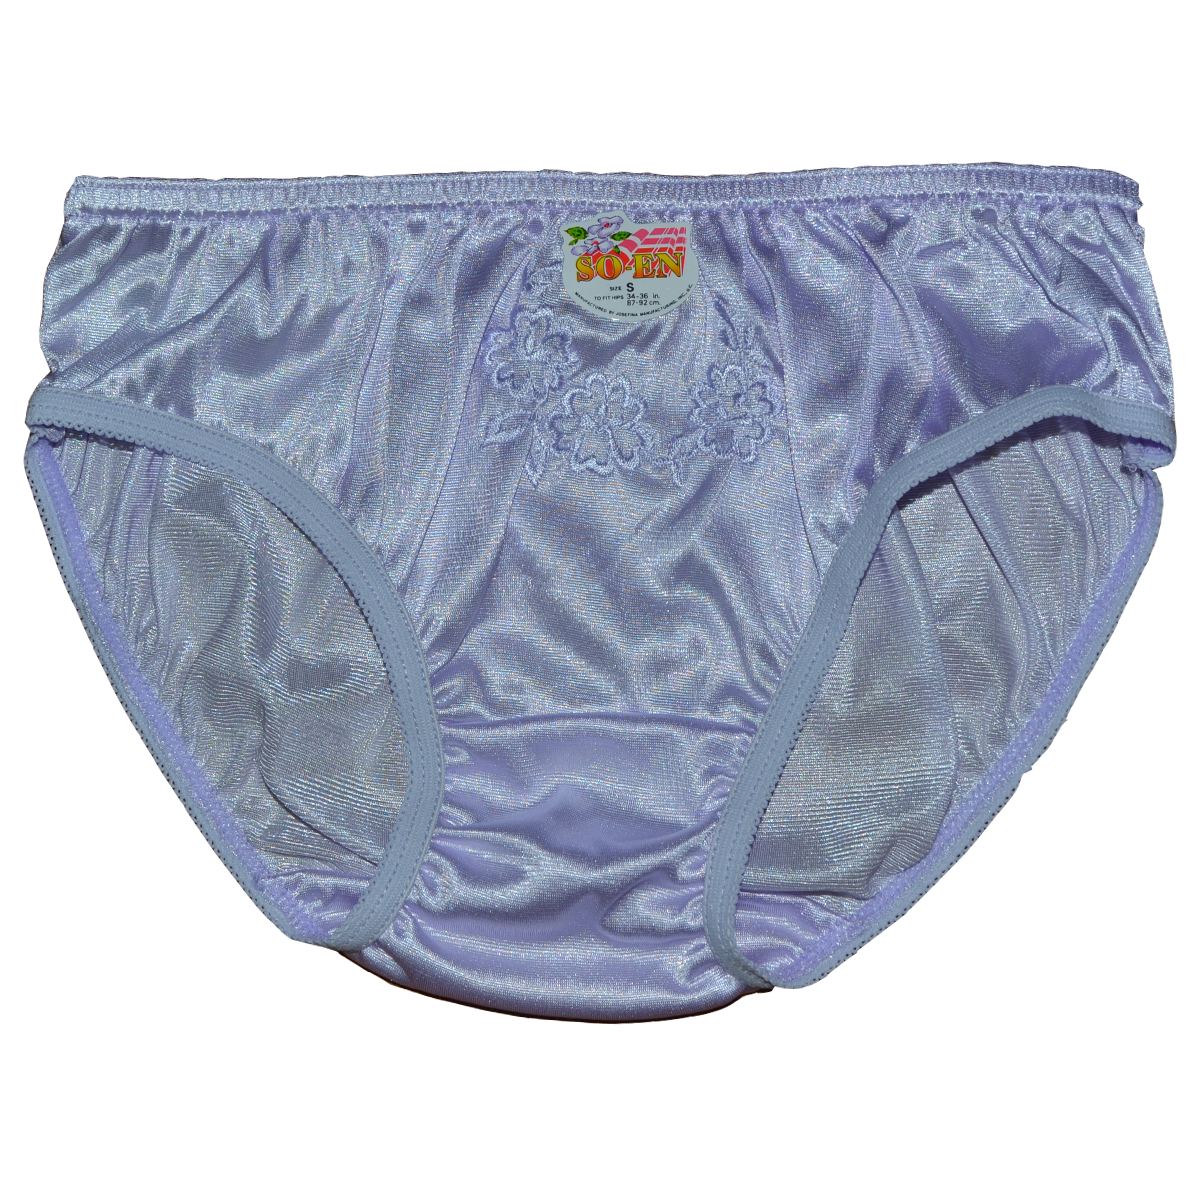 panty soen panty for women soen panty MBHL384 SO-EN 6 pcs. Hicut for ladies